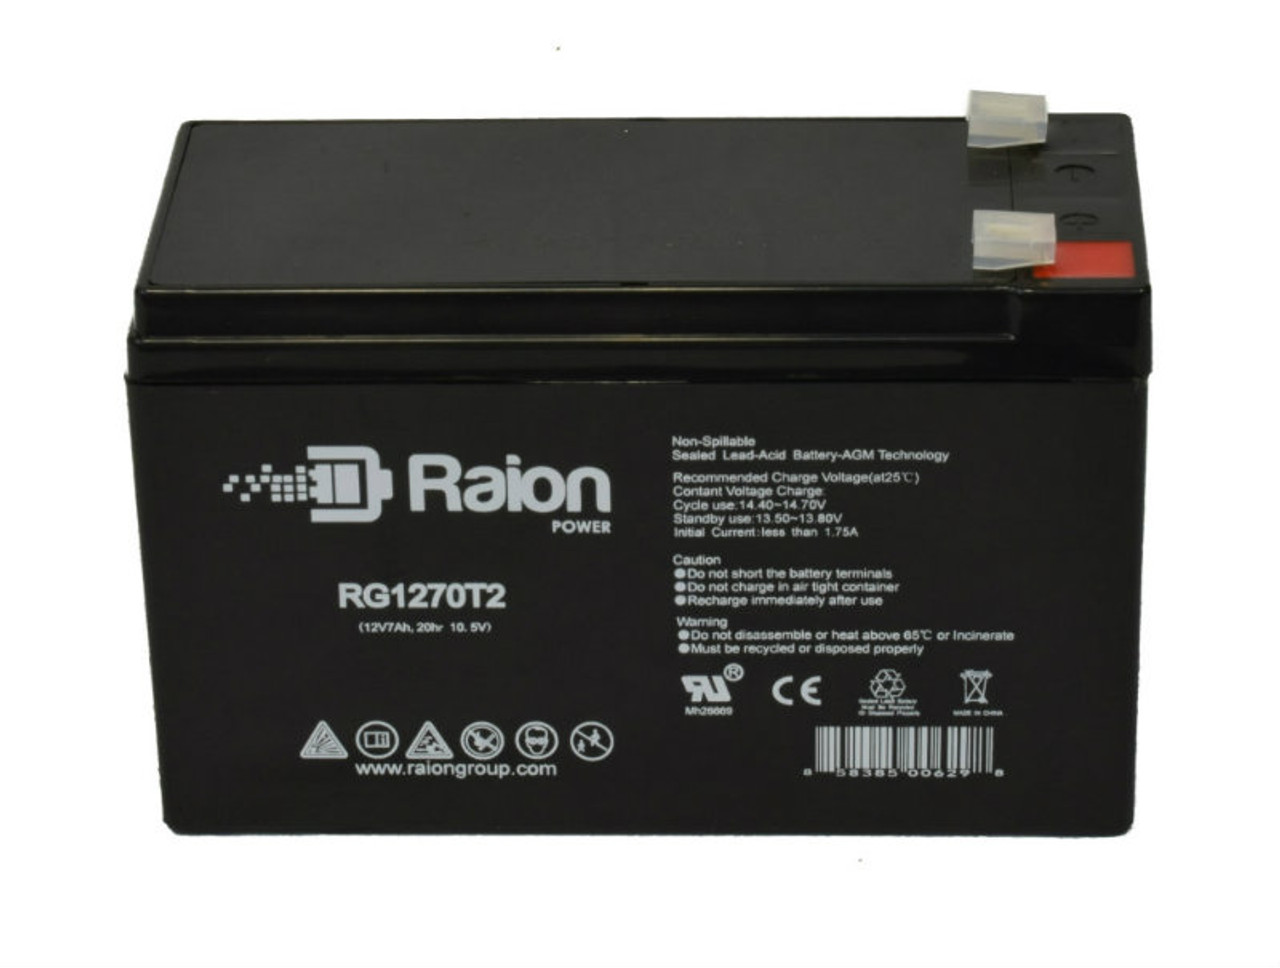 Raion Power RG1270T1 12V 7Ah Lead Acid Battery for AmeriGlide Imperial Stairlift